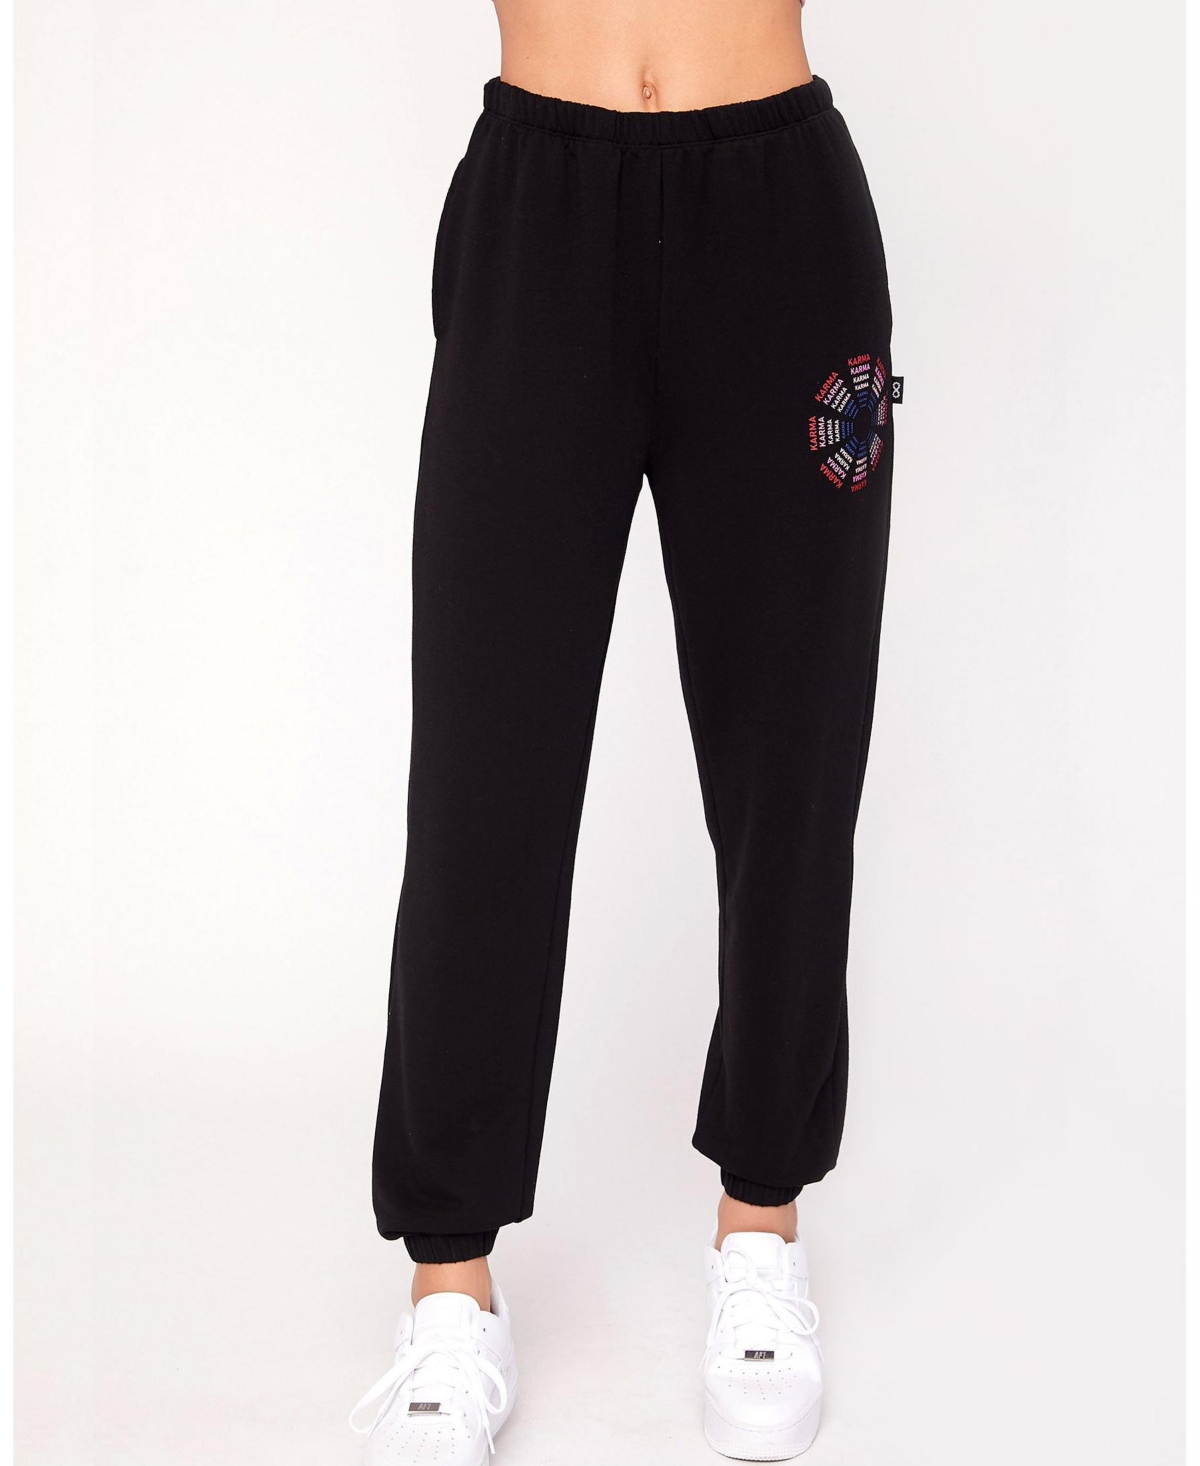 Women's Karma Graphic Viscose Blend Sweatpants for Women - Black/print